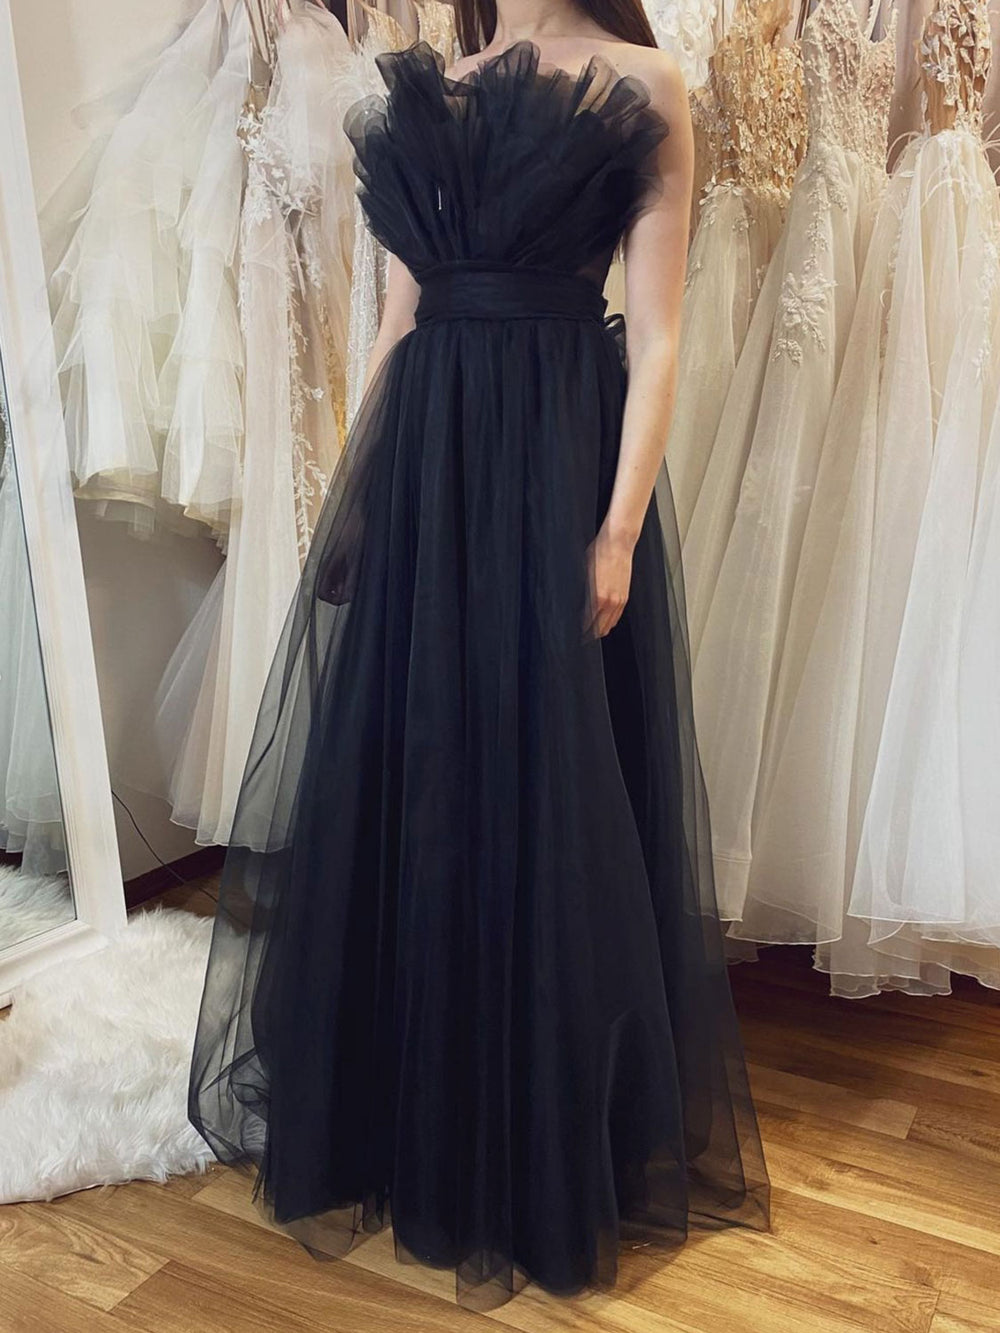 Simple black tulle long prom dress, black tulle formal dress